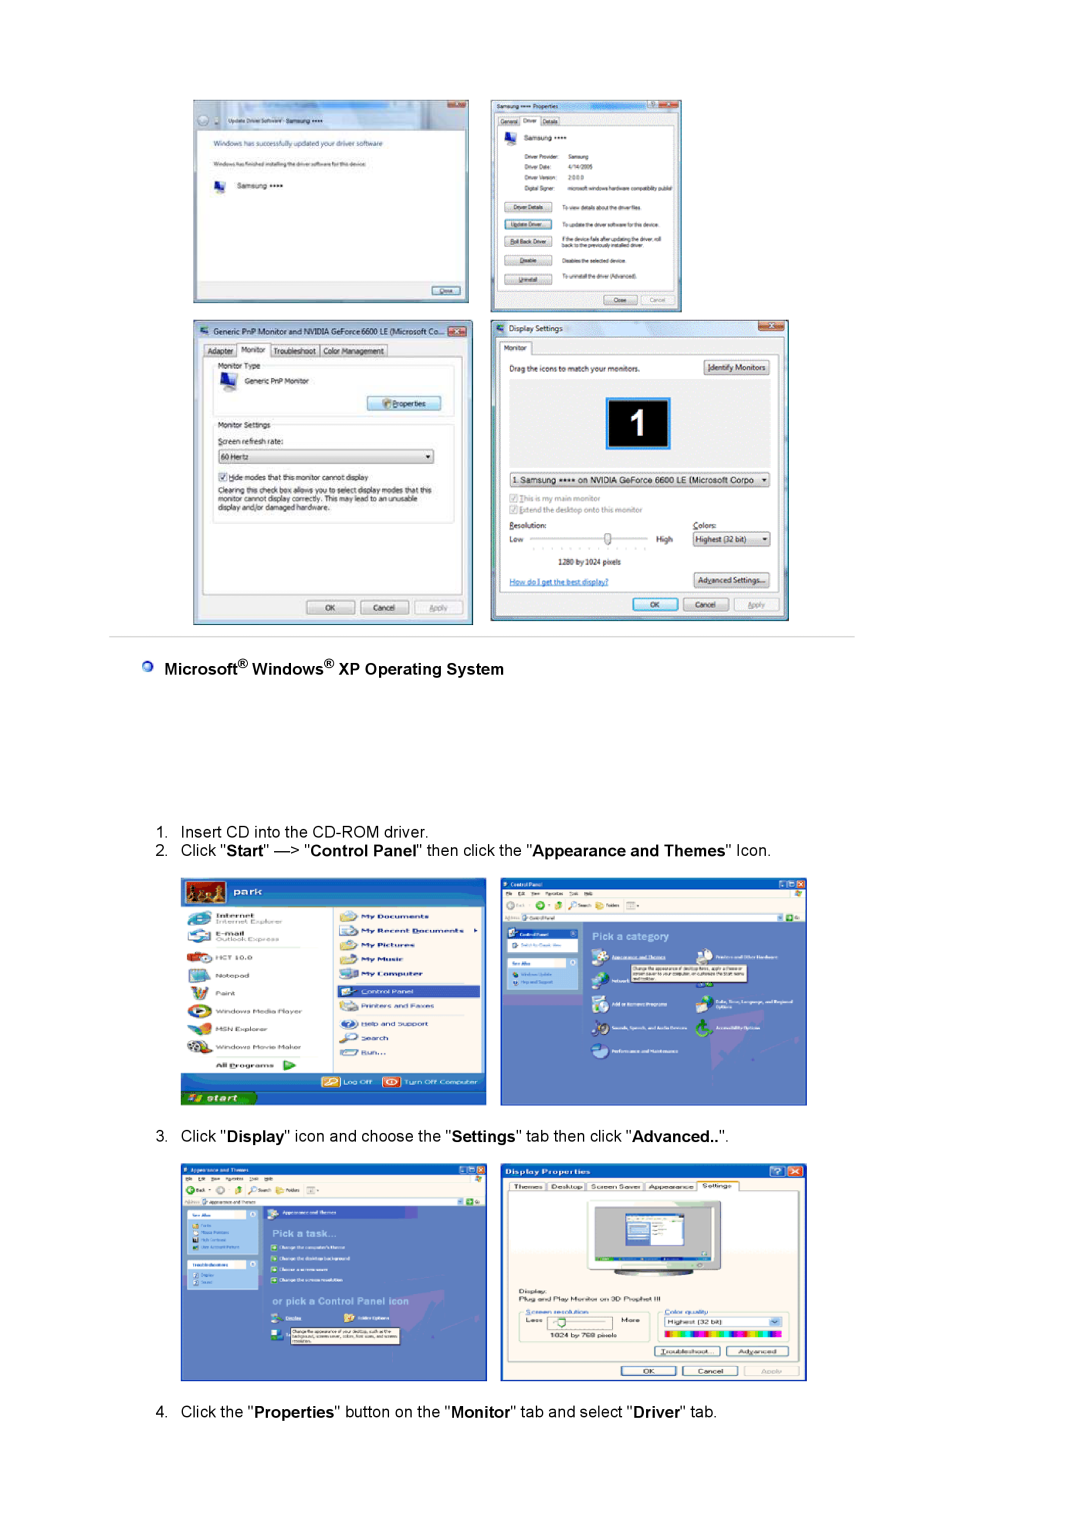 Samsung 714BM manual Microsoft Windows XP Operating System, Insert CD into the CD-ROM driver 